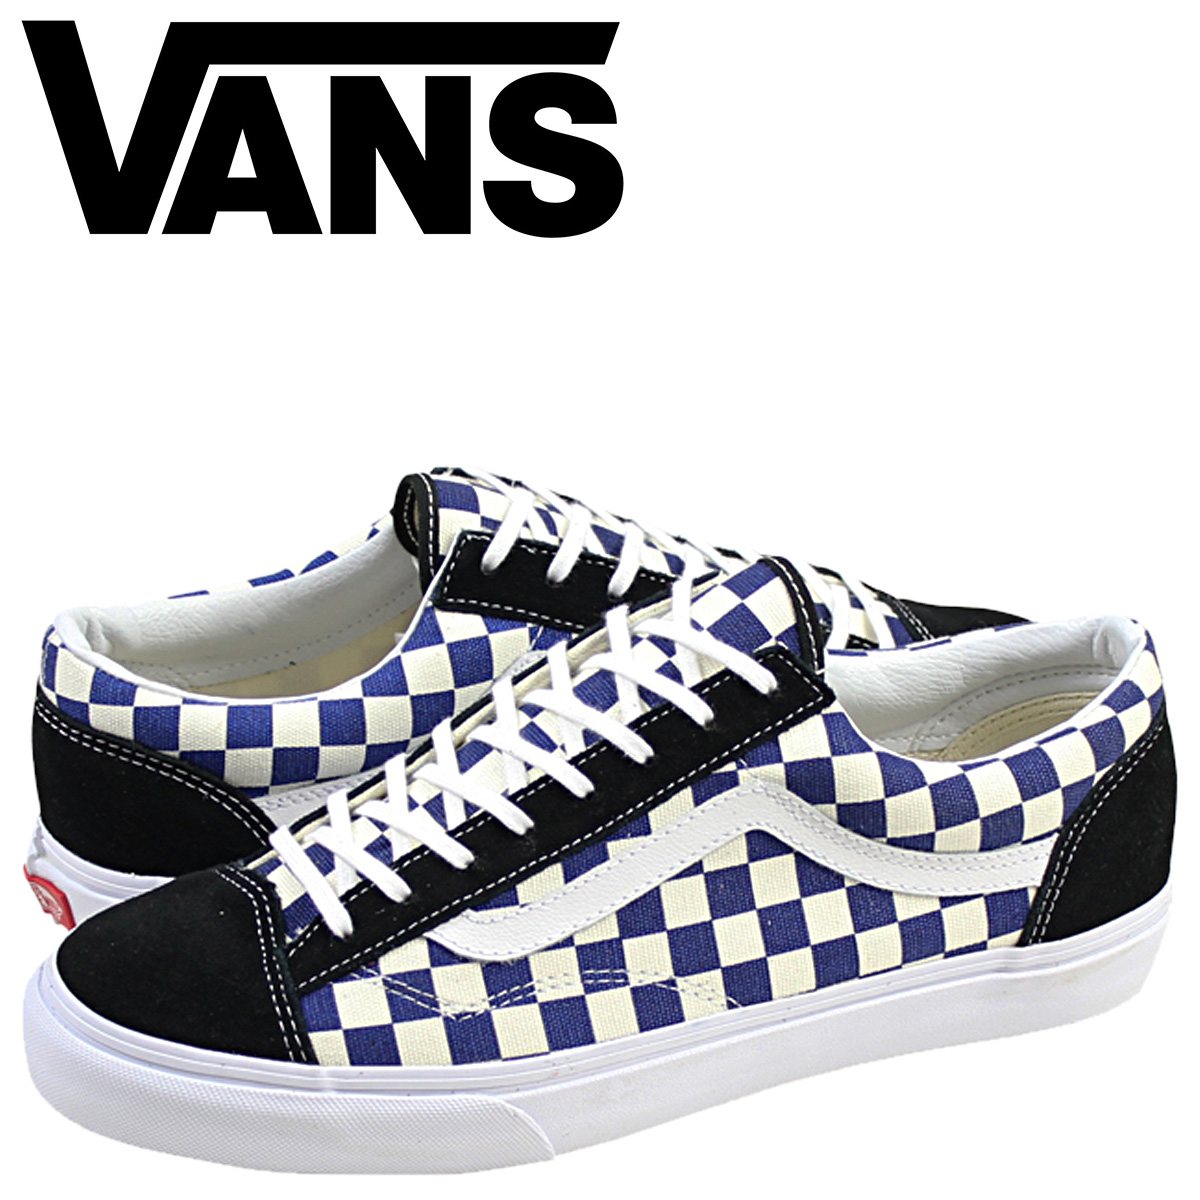 vans checkerboard style